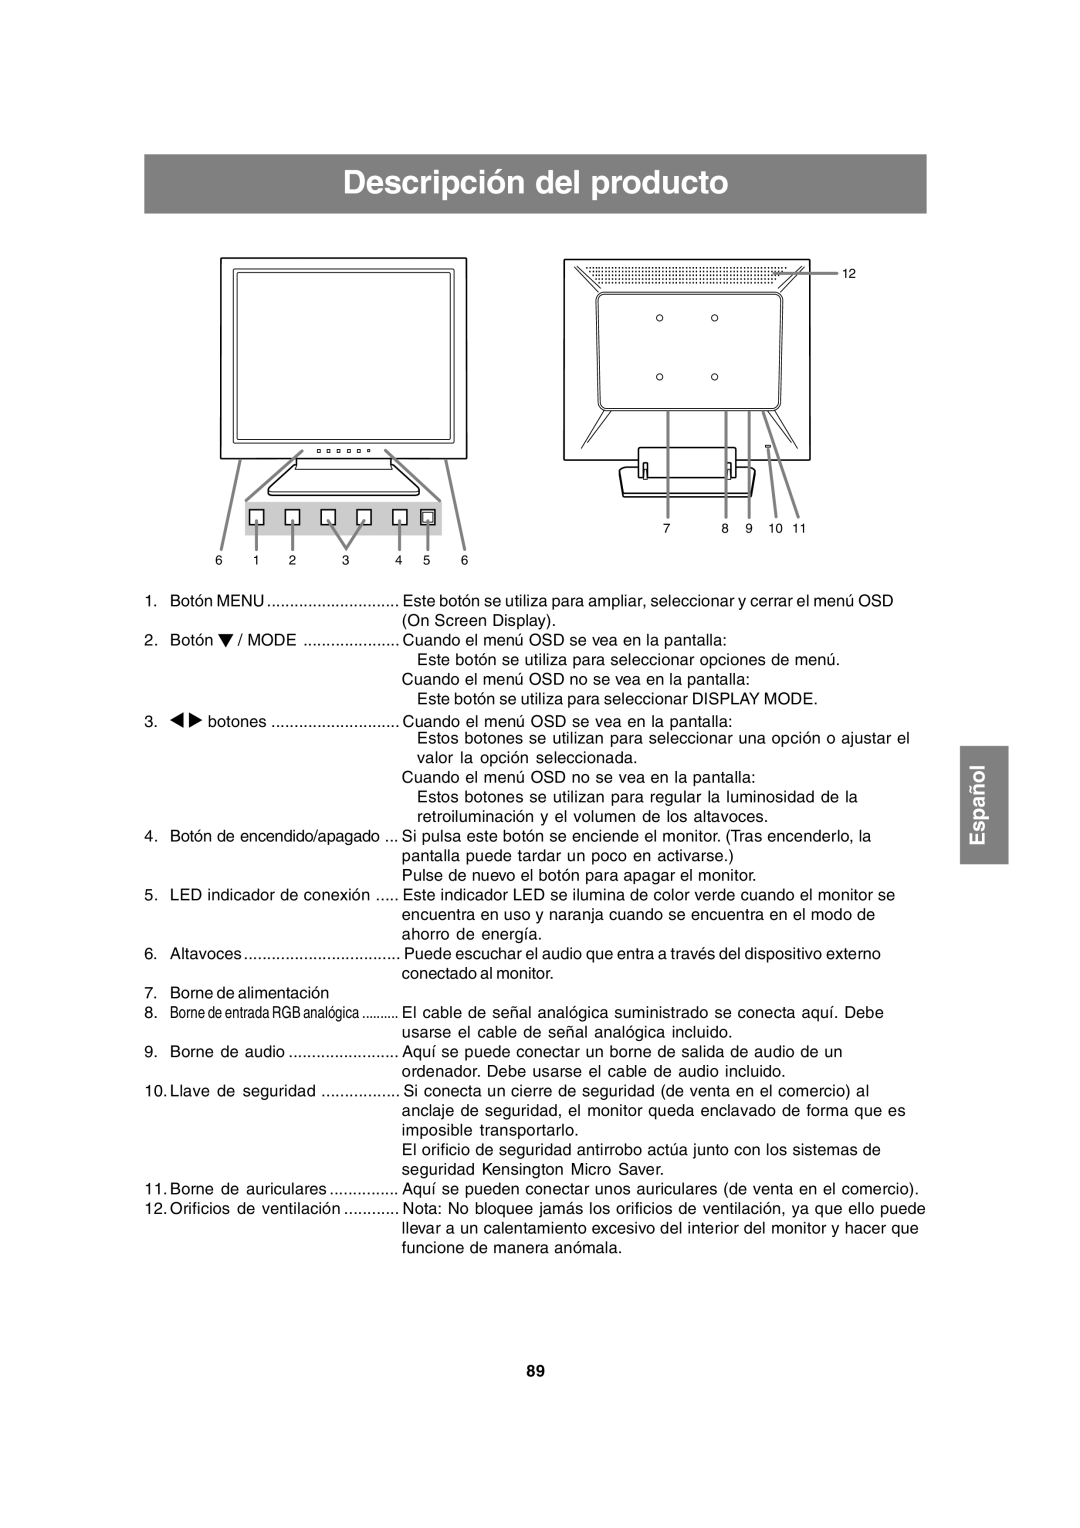 Sharp LL-T15A4 operation manual Descripción del producto, Español, Botón de encendido/apagado 